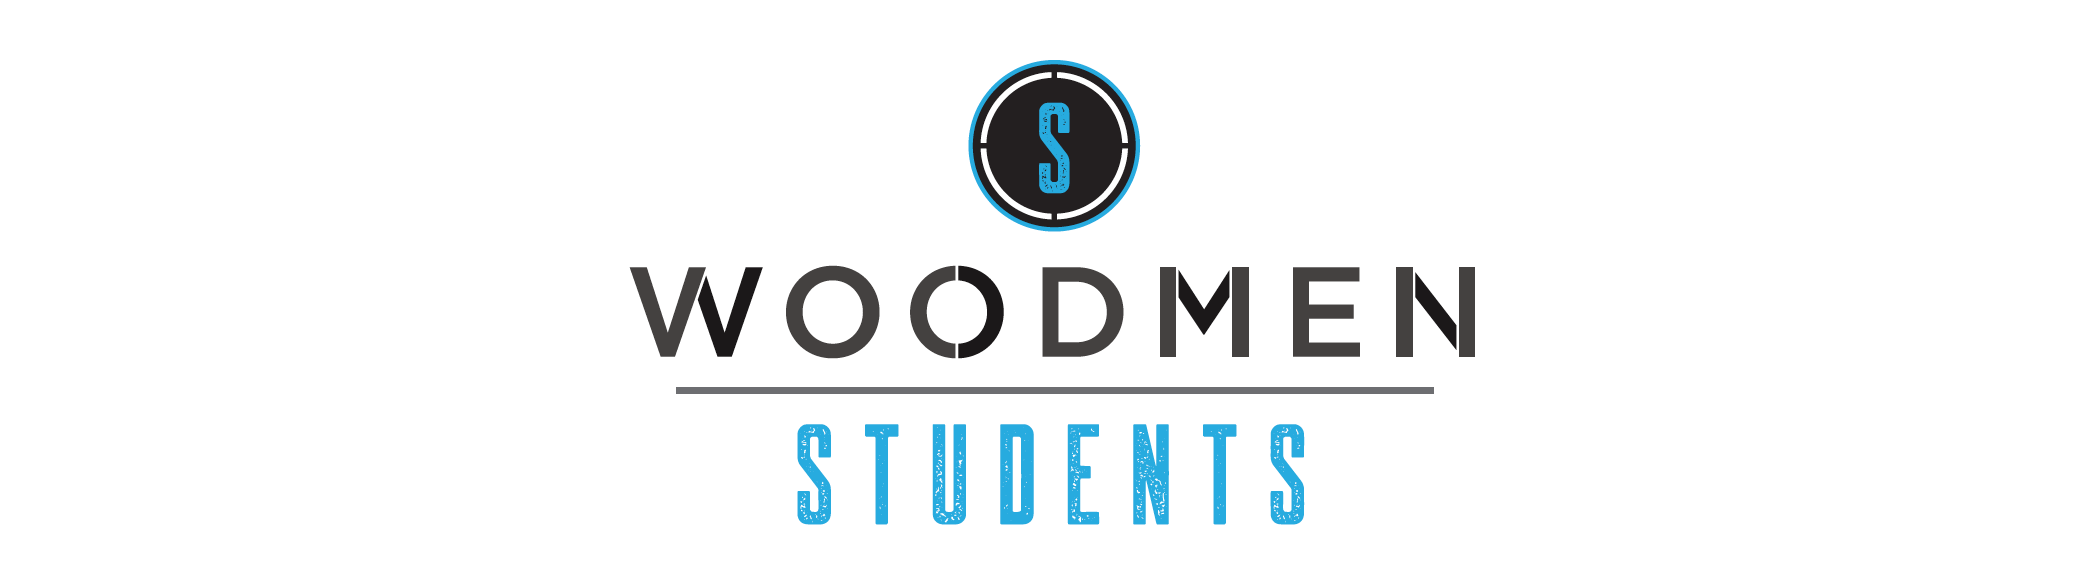 Woodmen Students Logo smaller badge.png